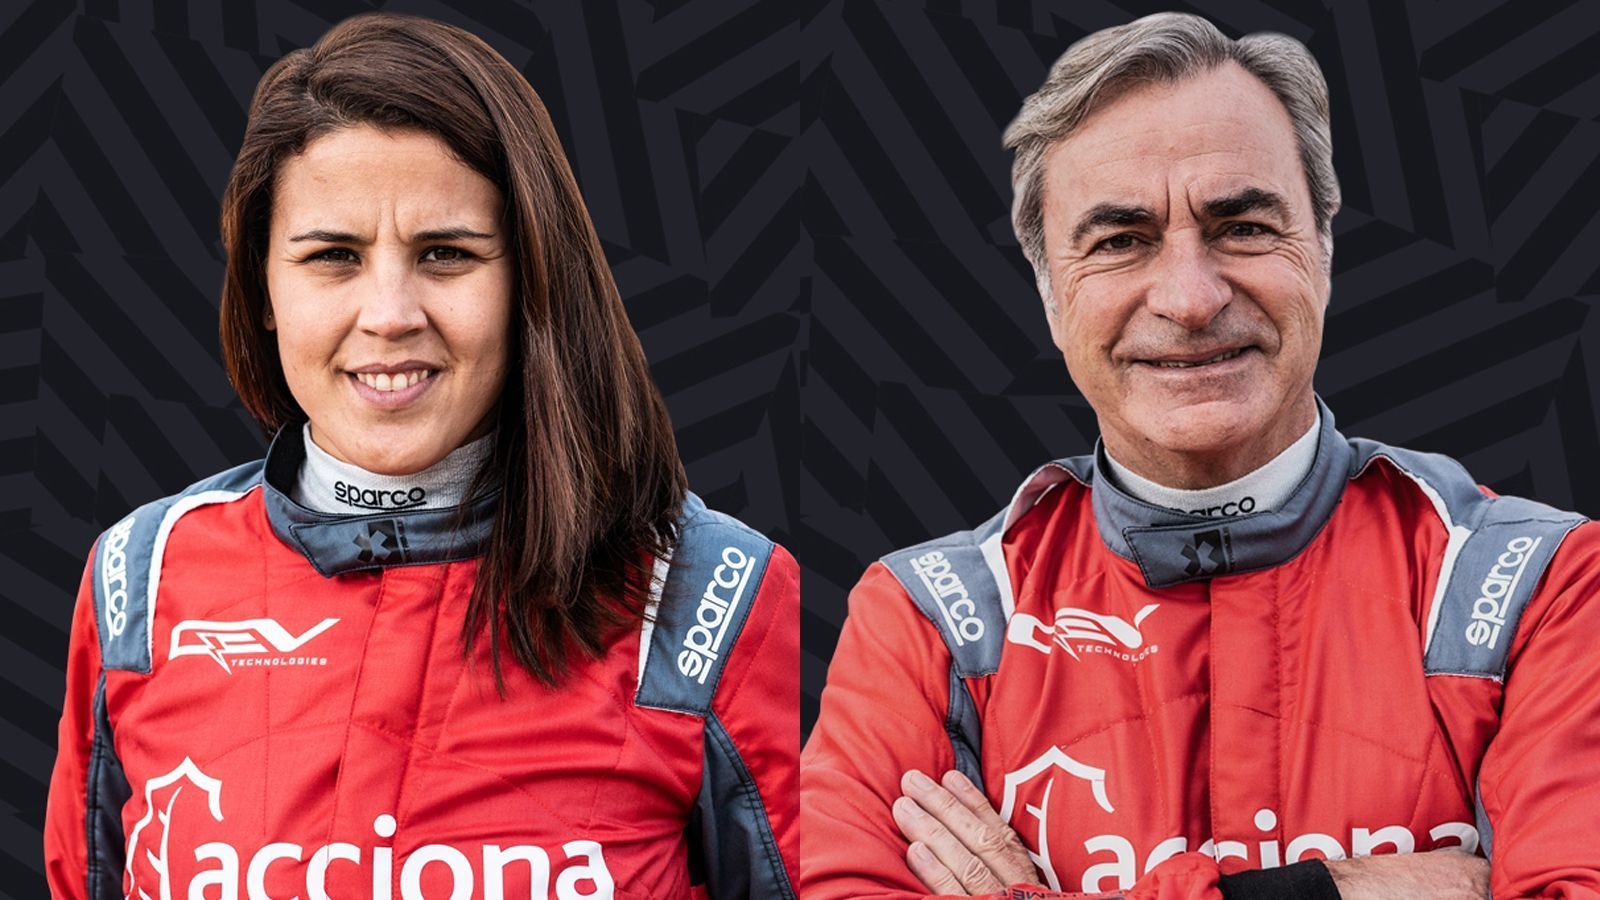 
                <strong>Acciona | Sainz XE Team</strong><br>
                &#x2022; Fahrer: Laia Sanz (ESP) u. Carlos Sainz (ESP) -<br>&#x2022; Team aus: Spanien<br>
              